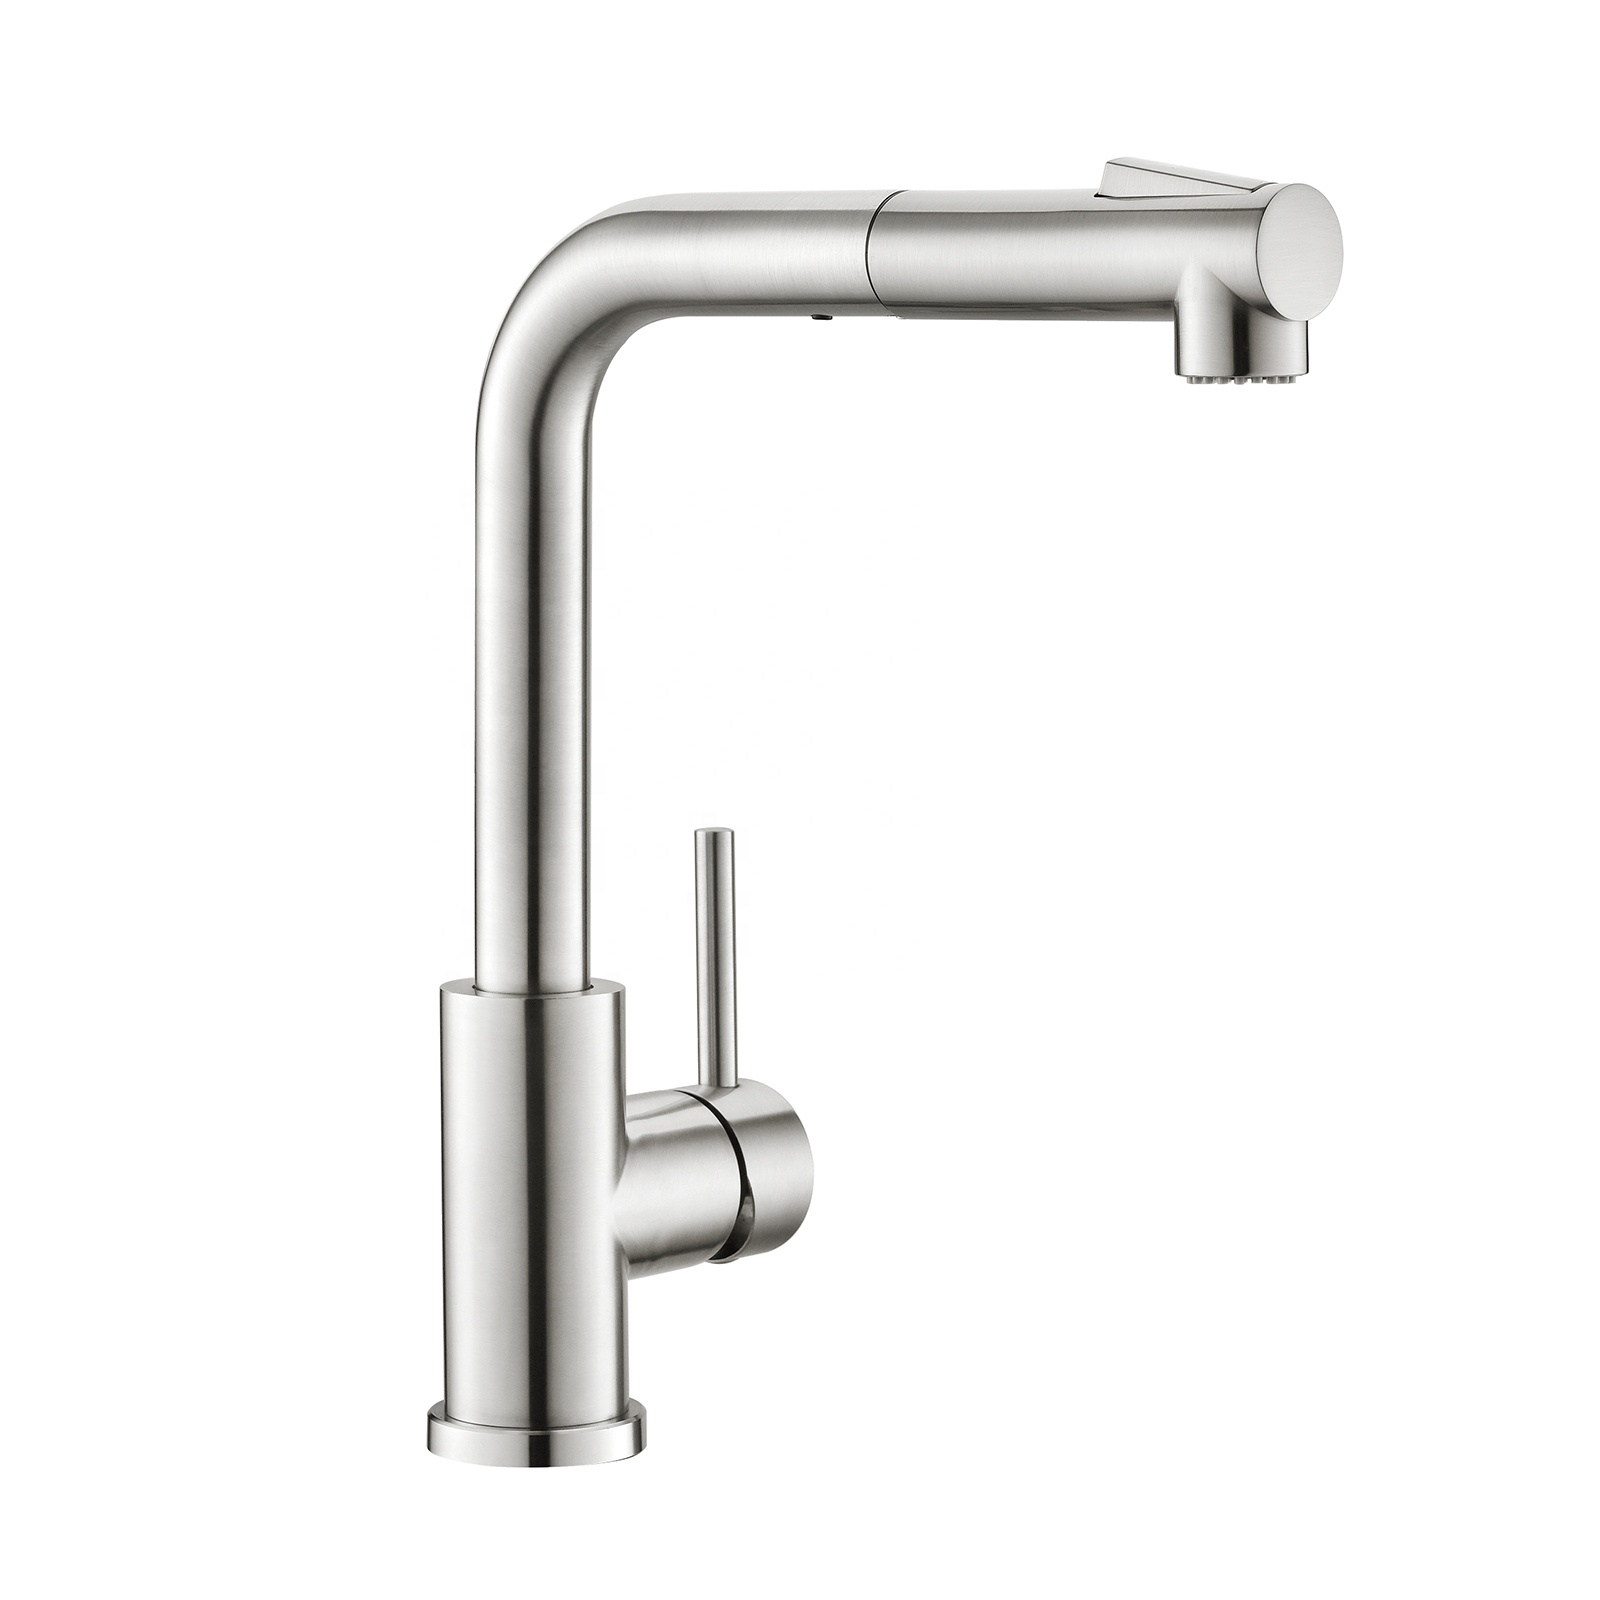 Faucet Kitchen Flexible Faucet Sprayer Sus304 Stainless Steel Kitchen Sink Faucet